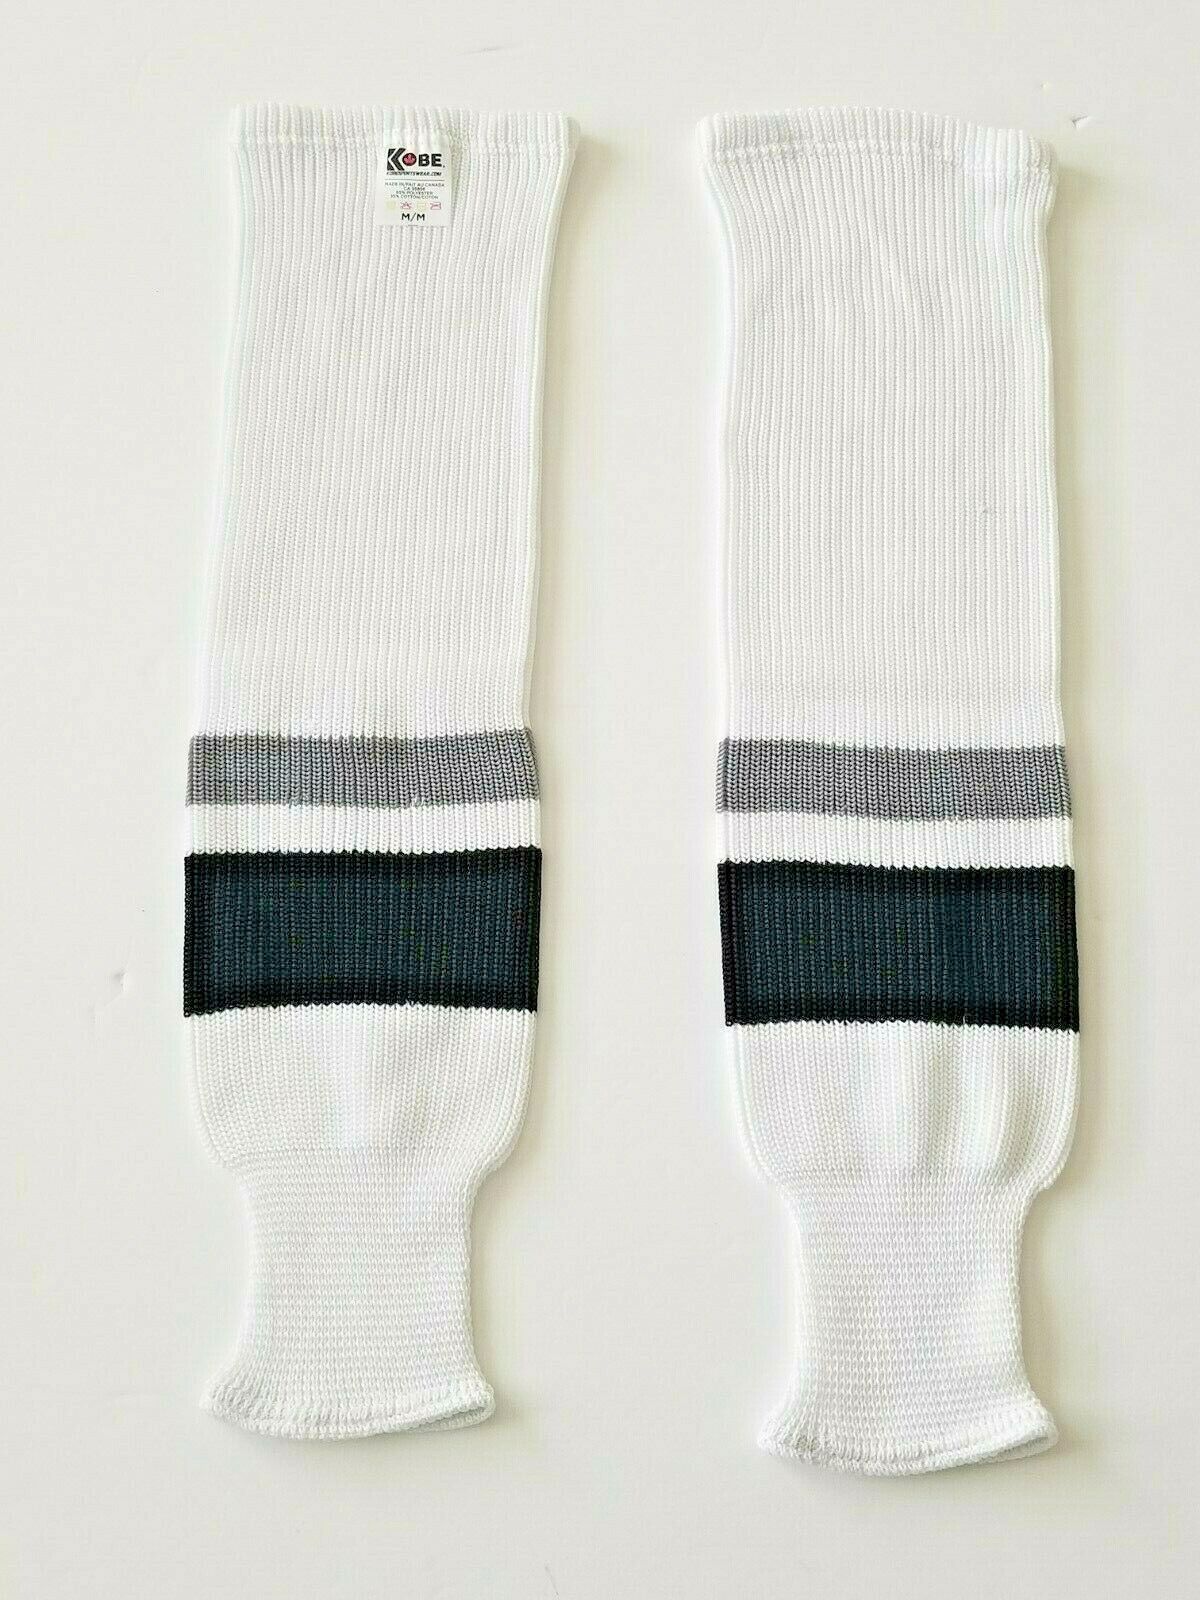 Kobe X9800 X-series Knit Ice Hockey Socks